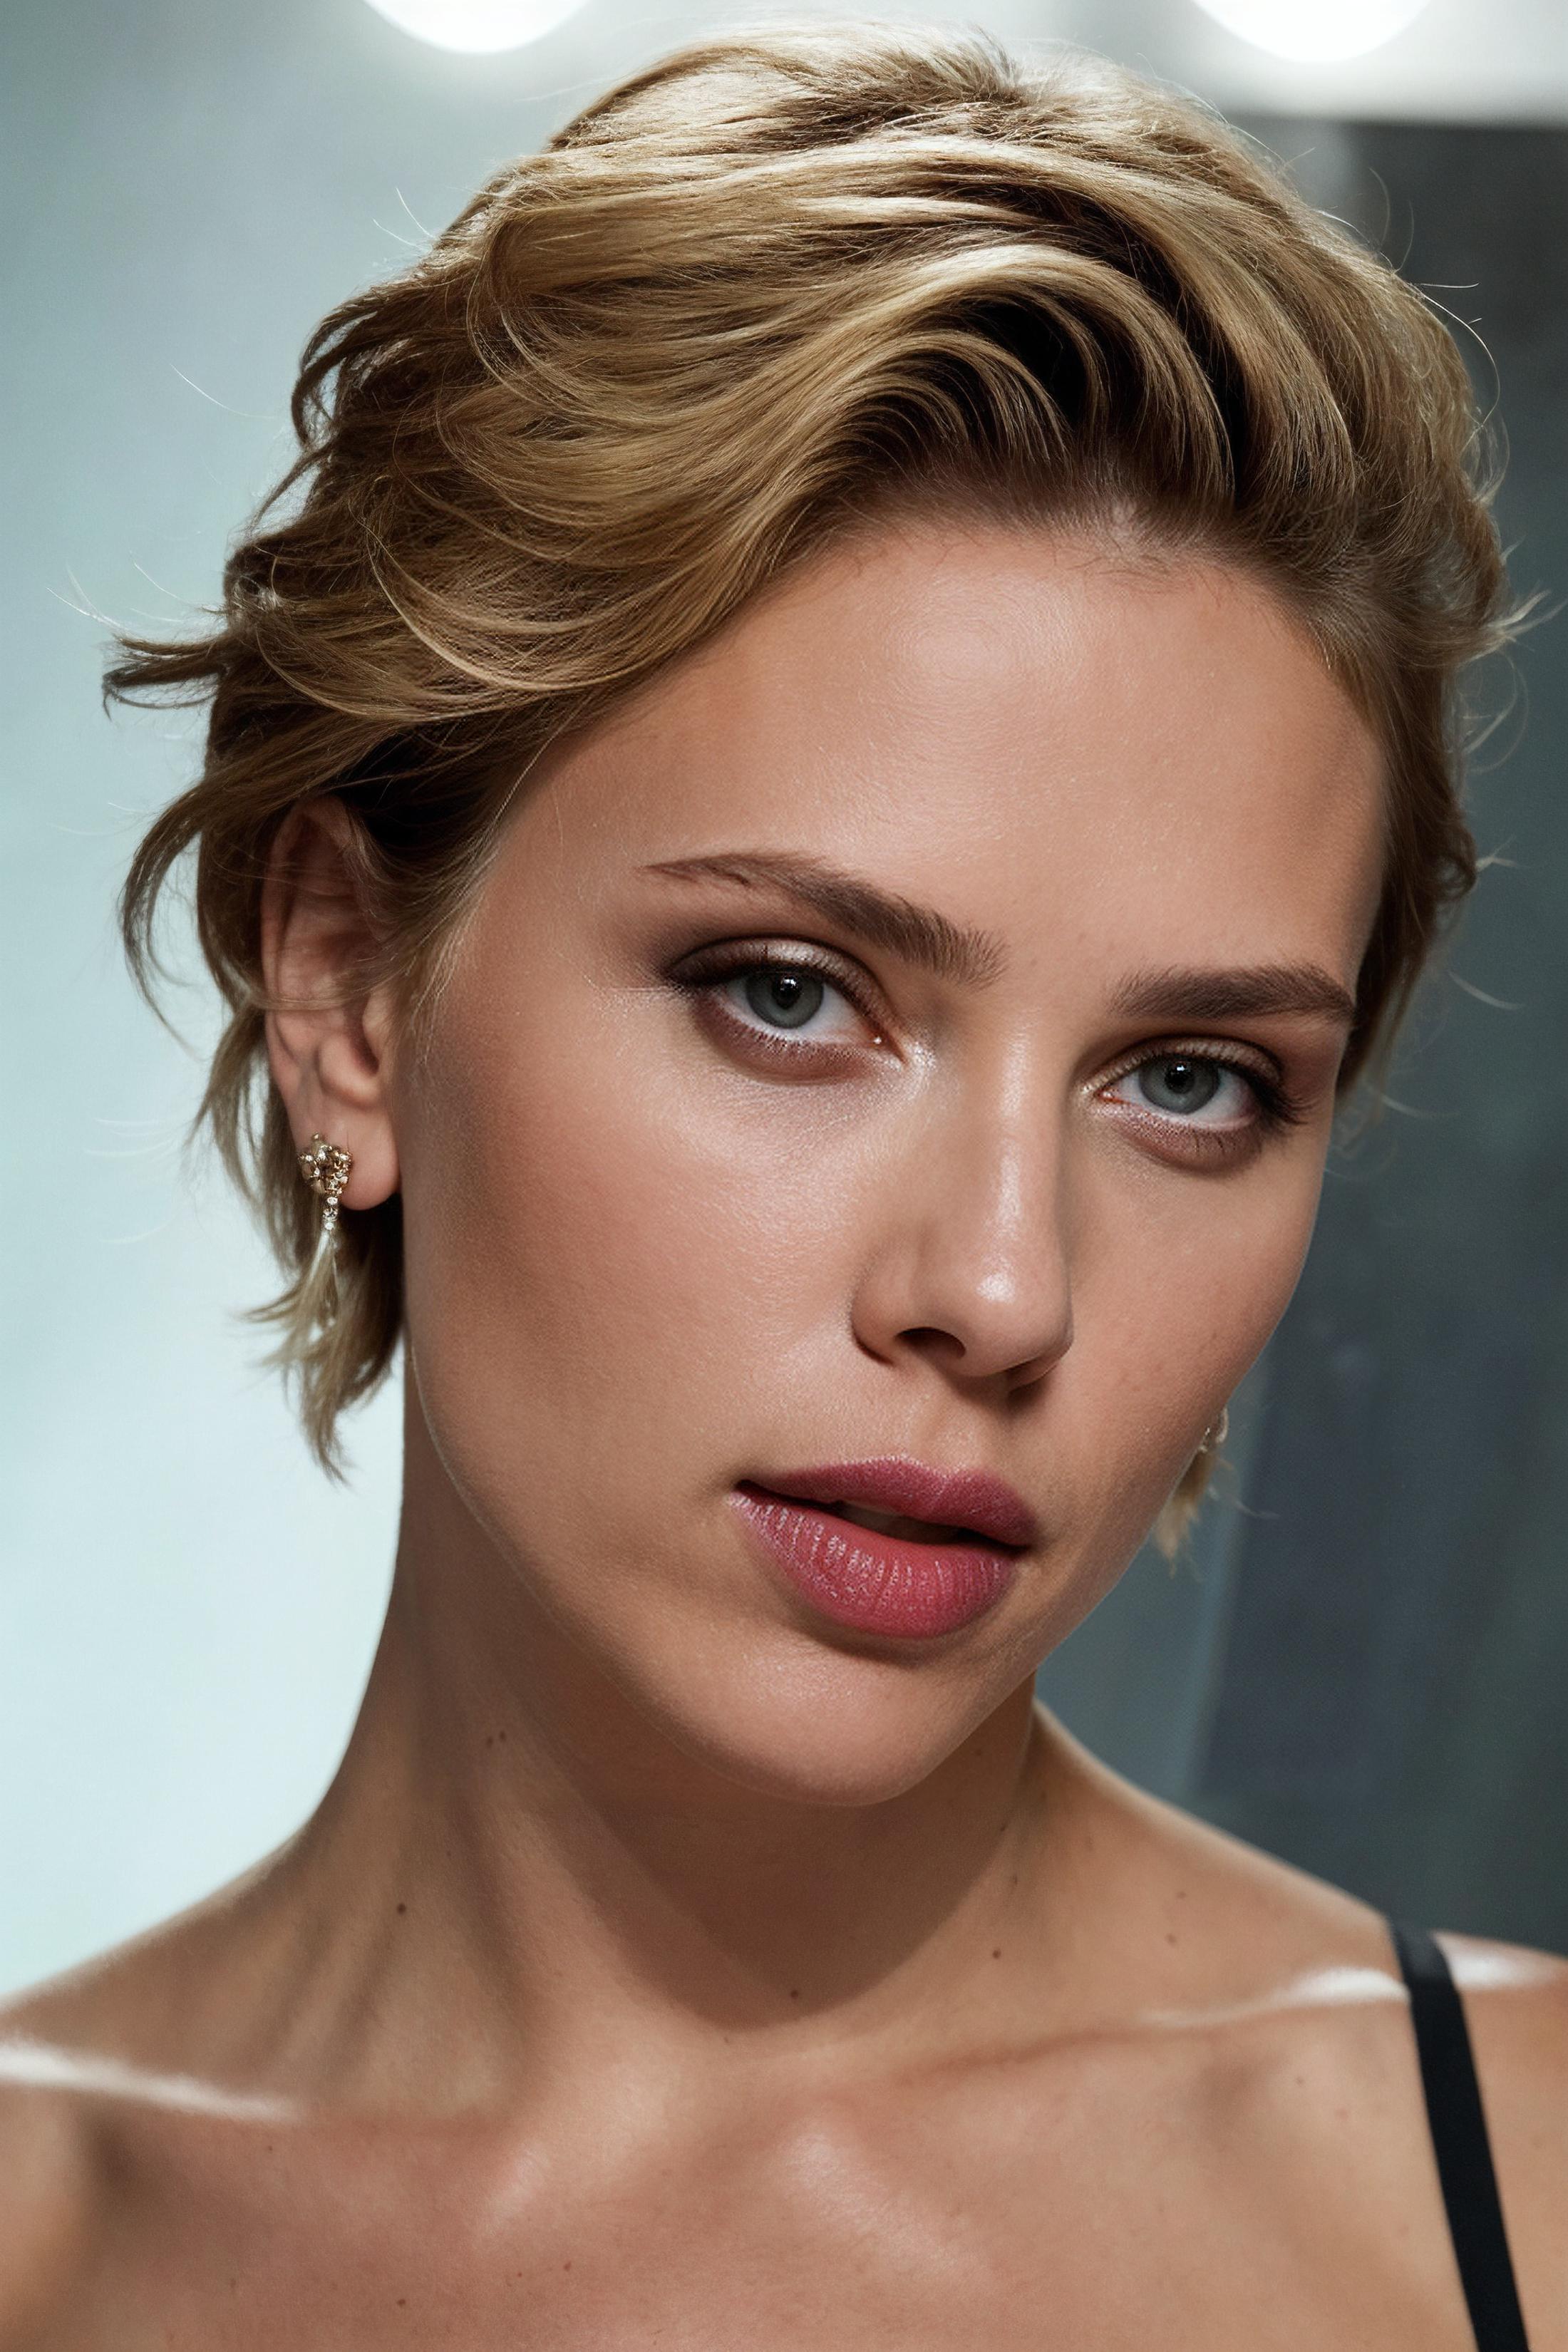 Scarlett Johansson image by Zojix